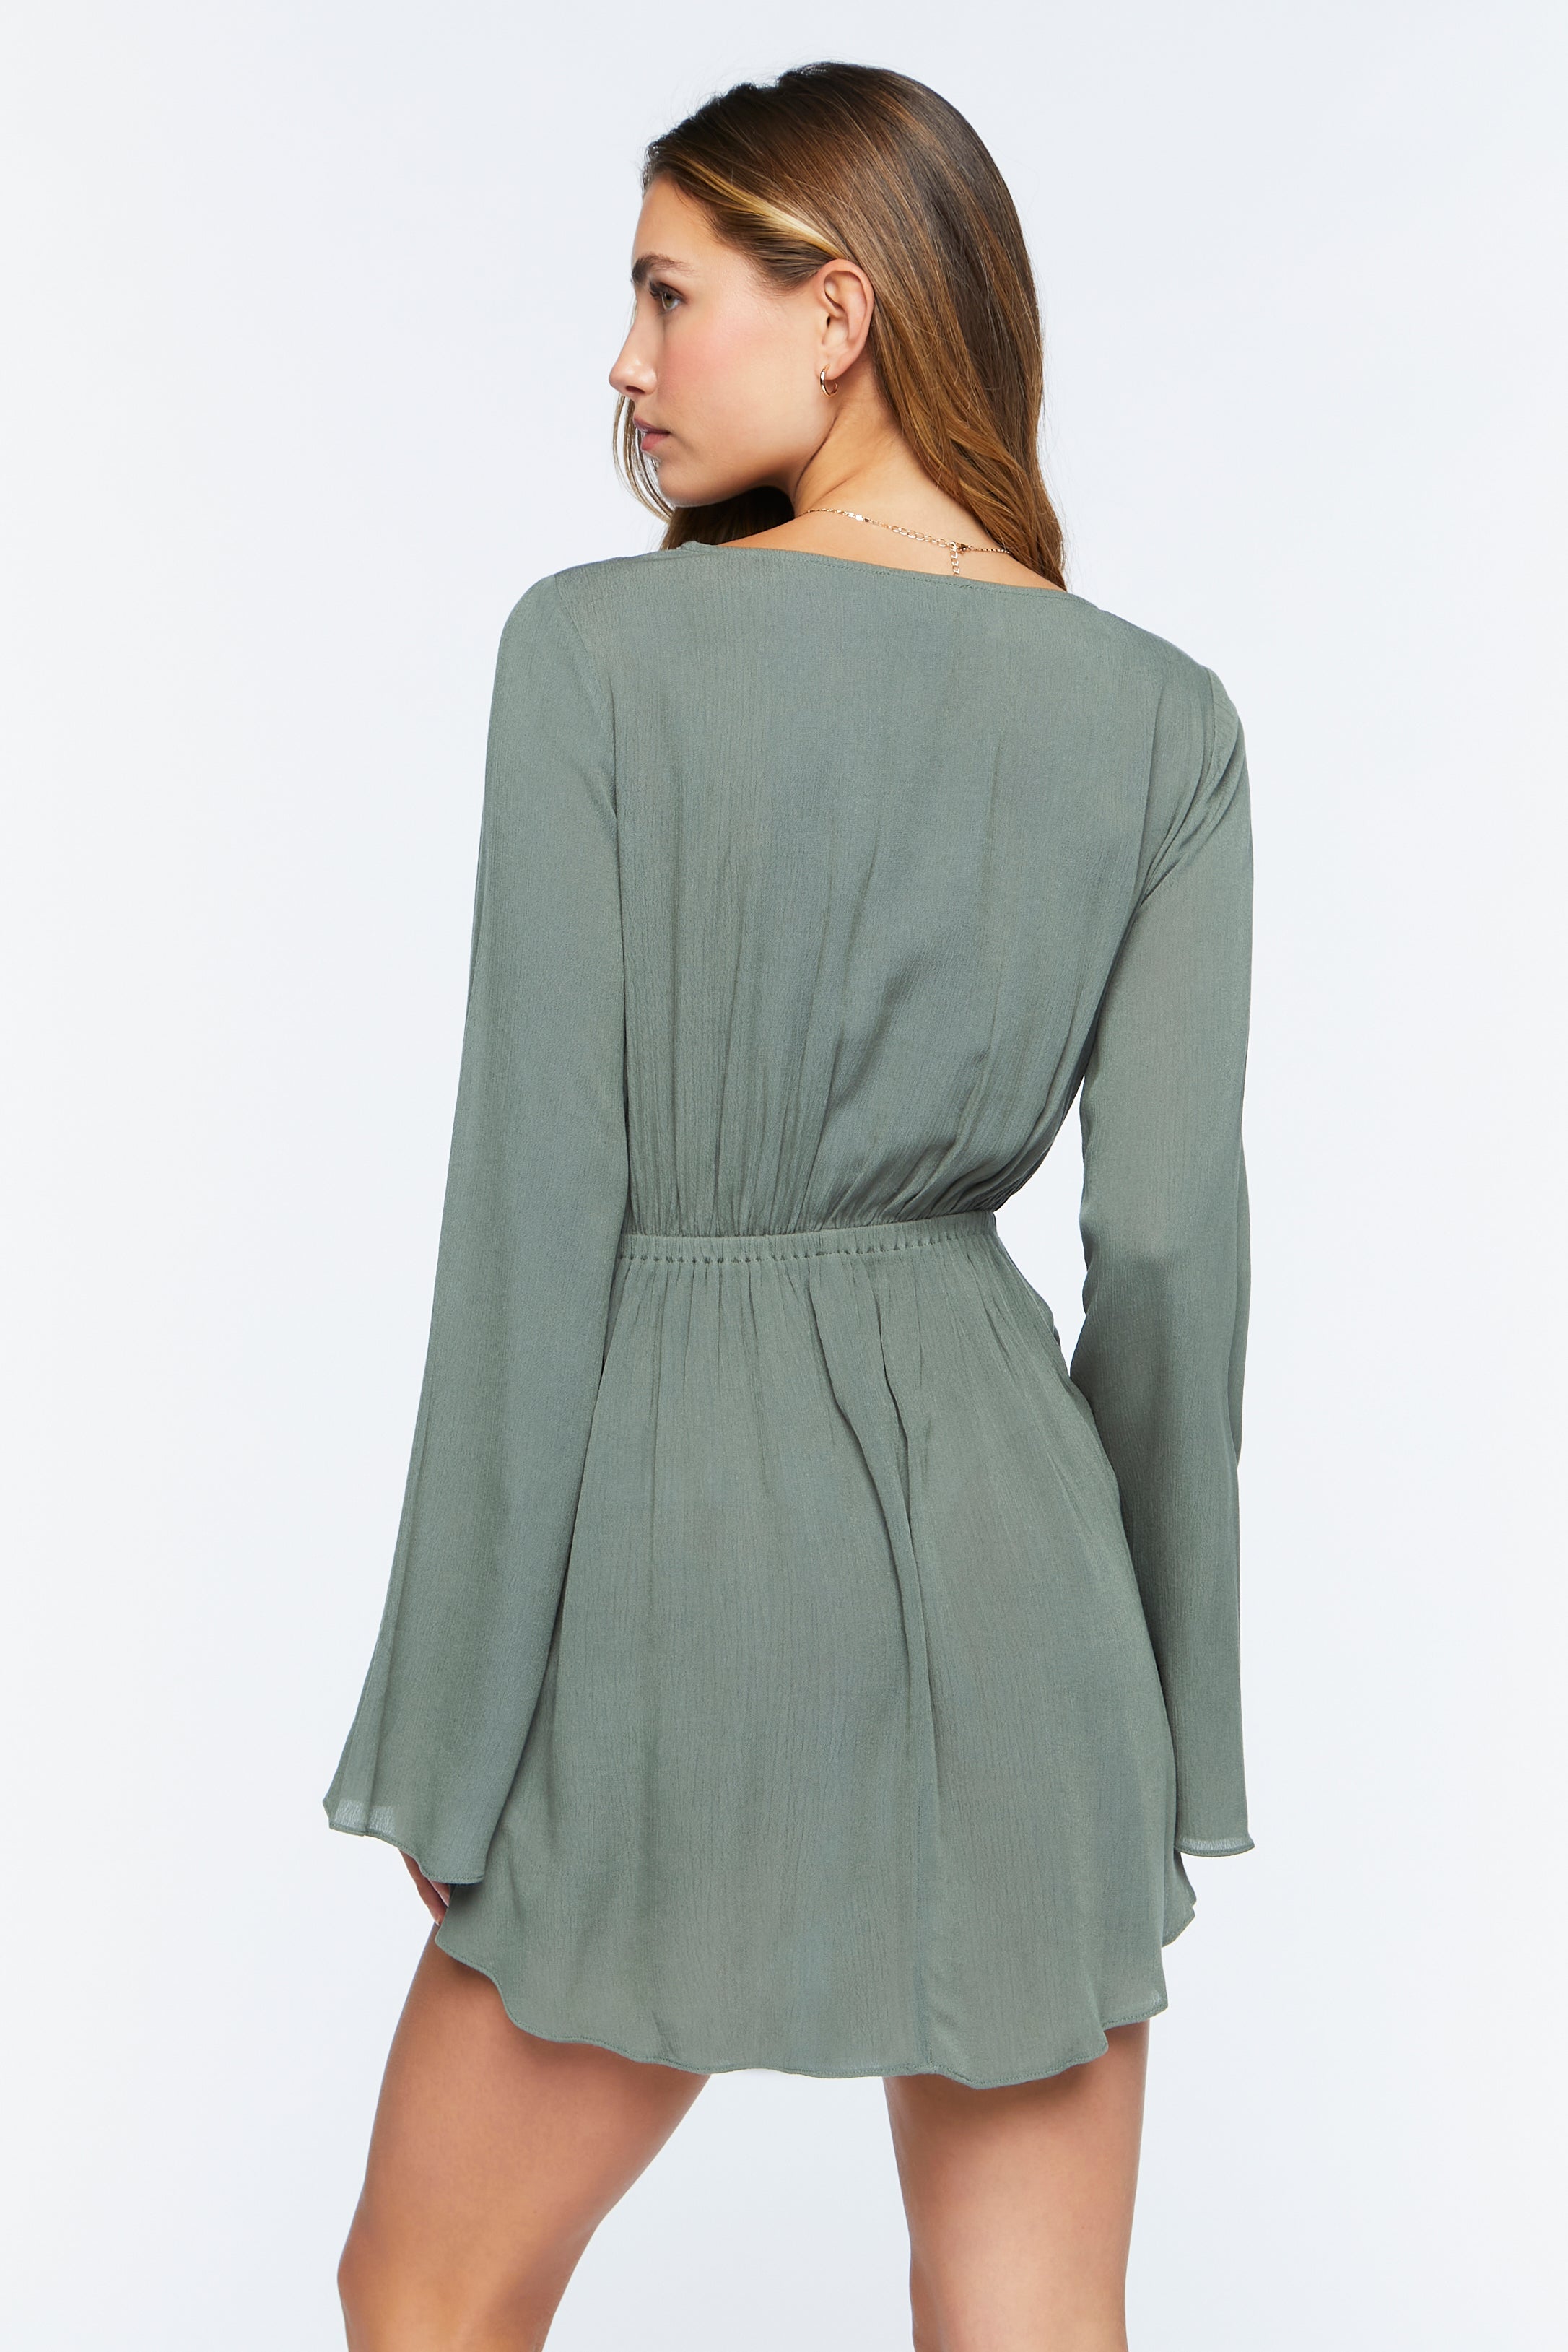 Olive Gauze Bell-Sleeve Mini Dress 2